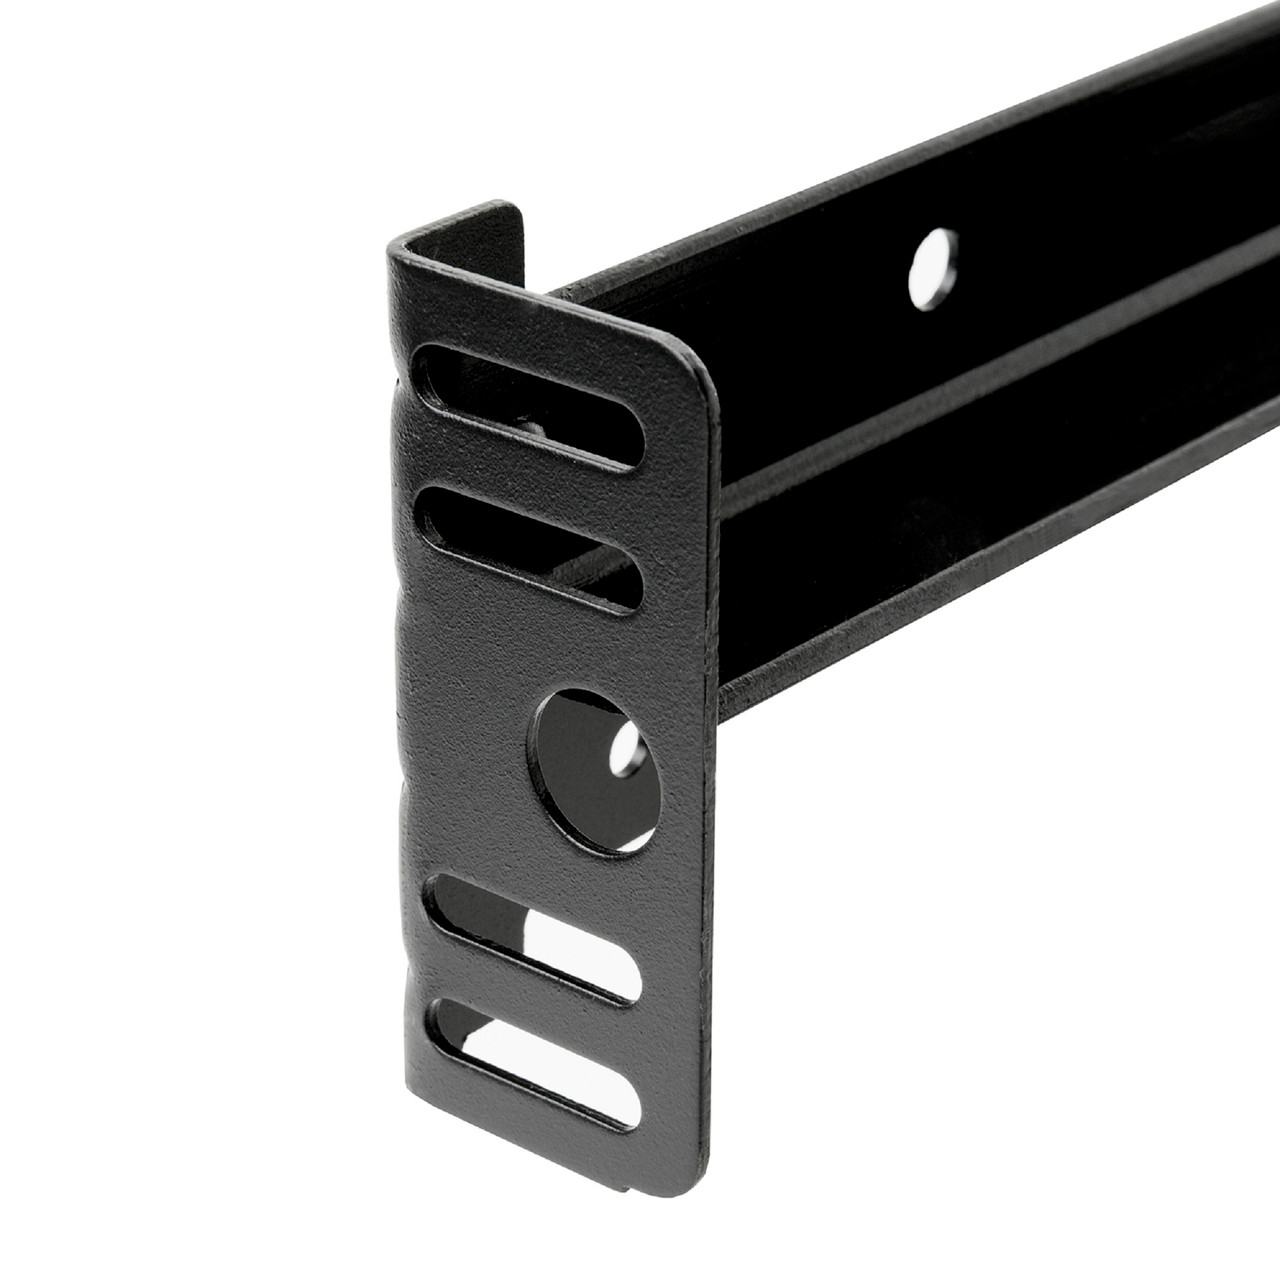 Malouf 8" Universal Steel Bed Frame, Detailed View Of Headboard Brace